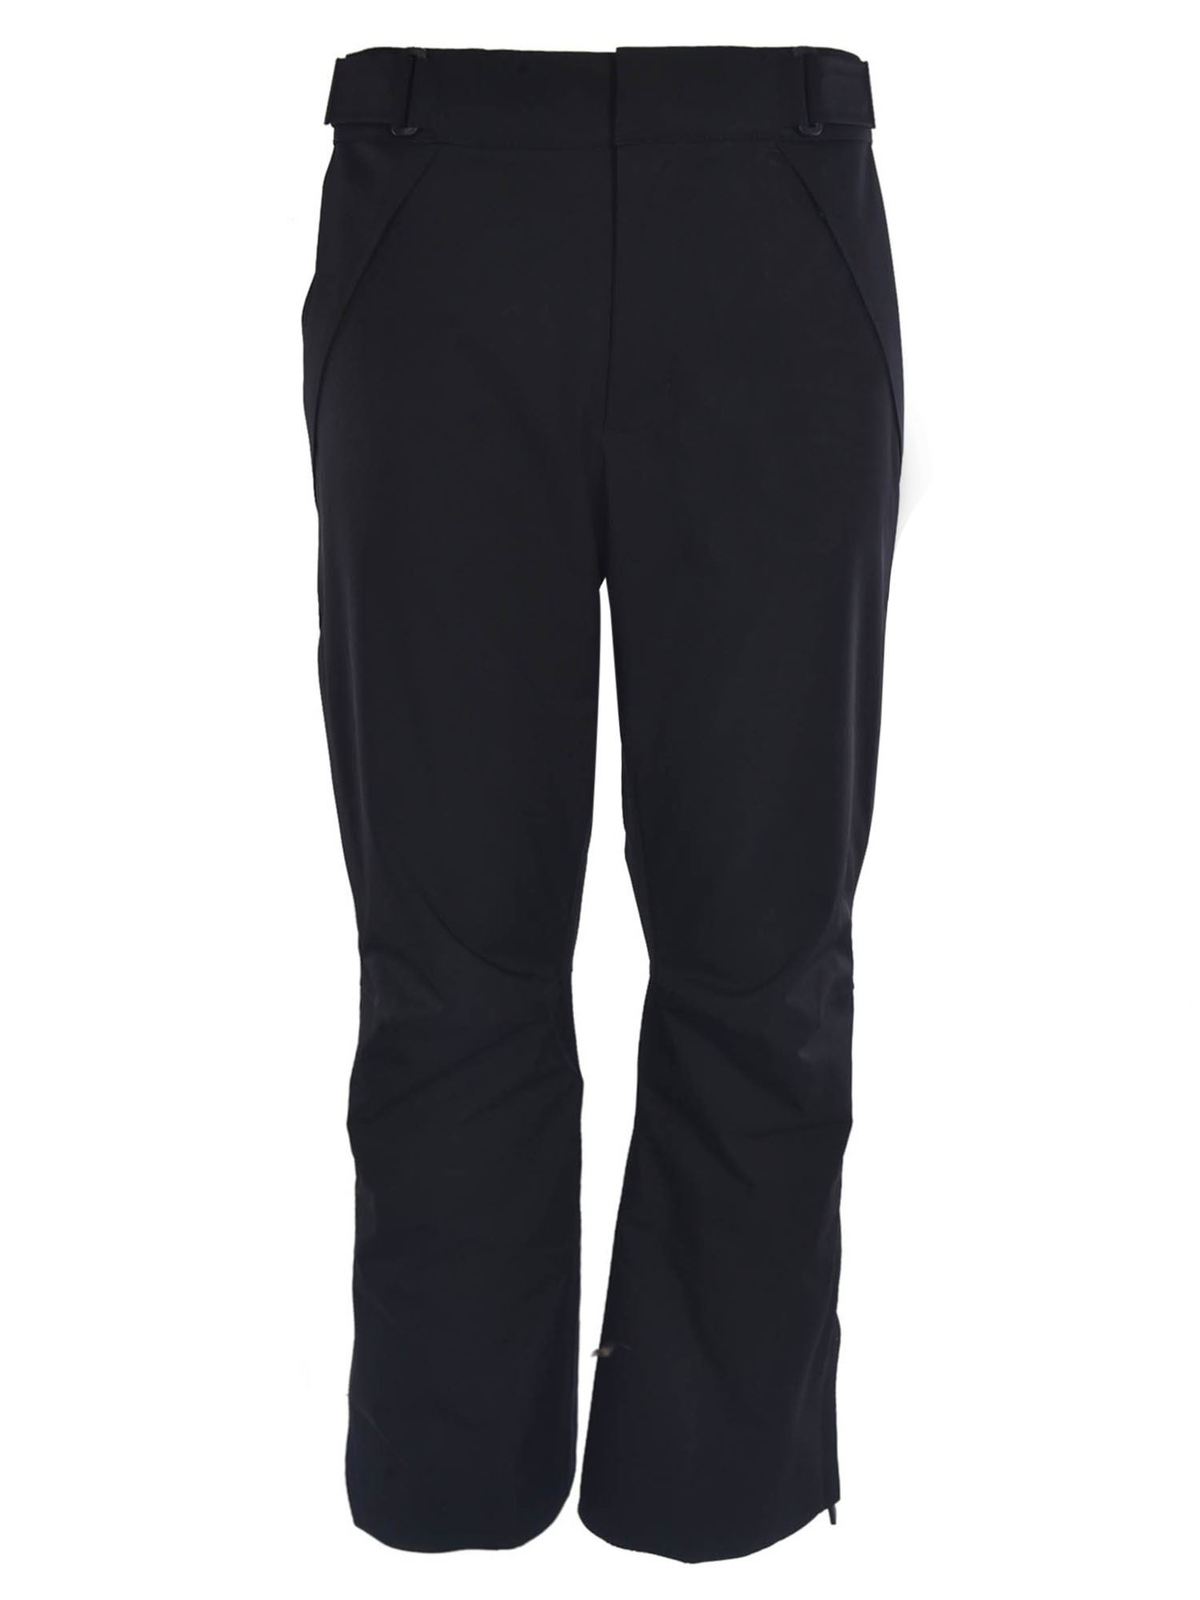 haar Luipaard evolutie Tracksuit bottoms Moncler Grenoble - Ski pants in black - 2A6034053066999